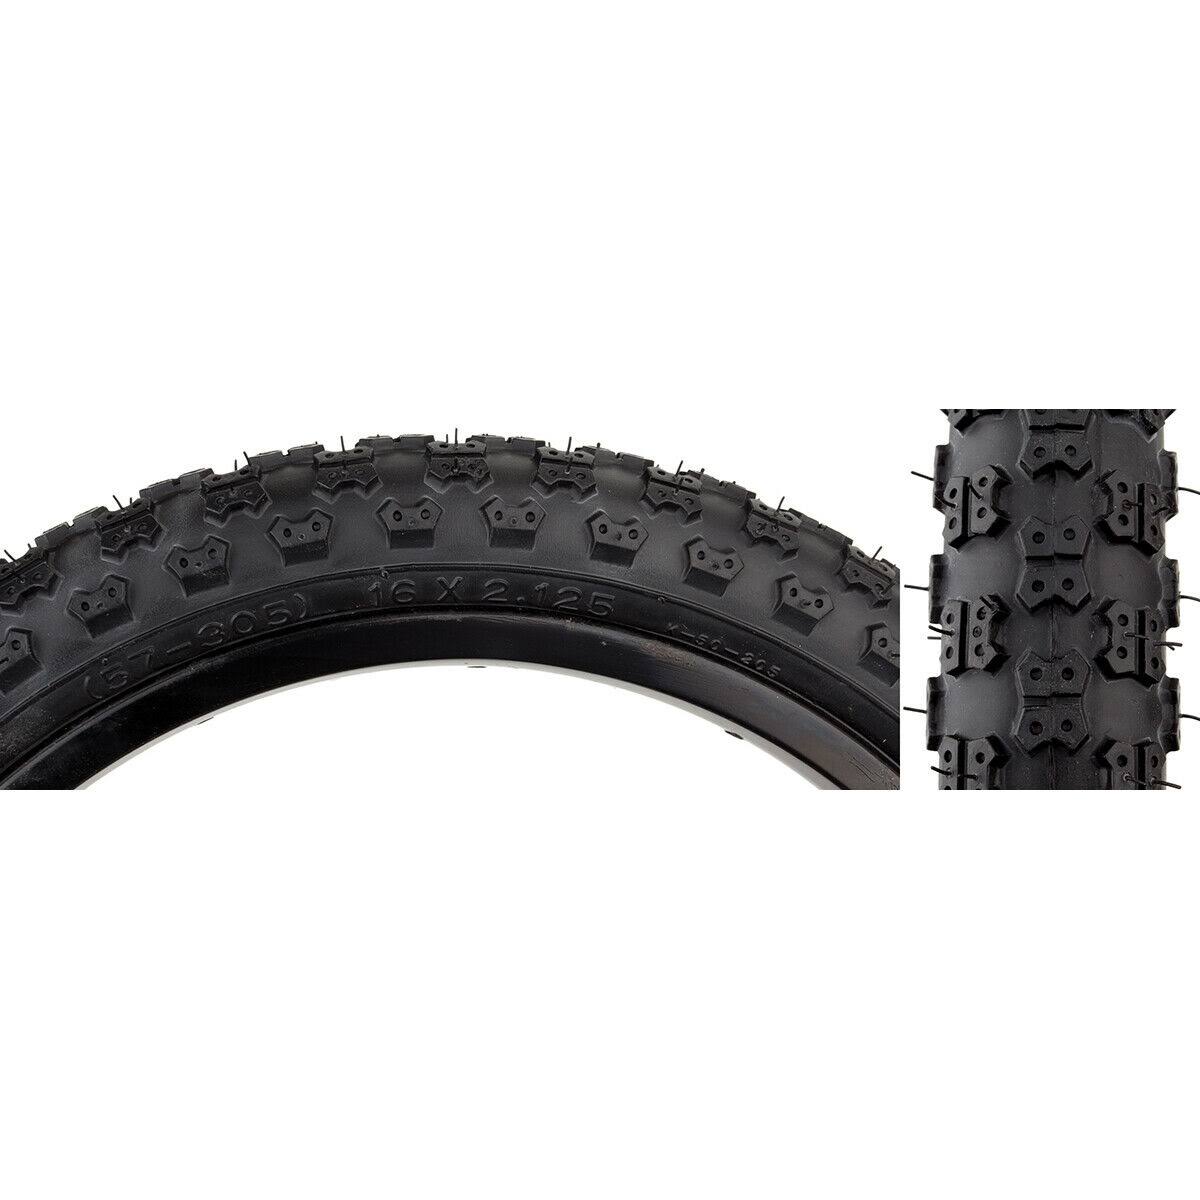 Sunlite Bicycle Tire - Black, 2.125"